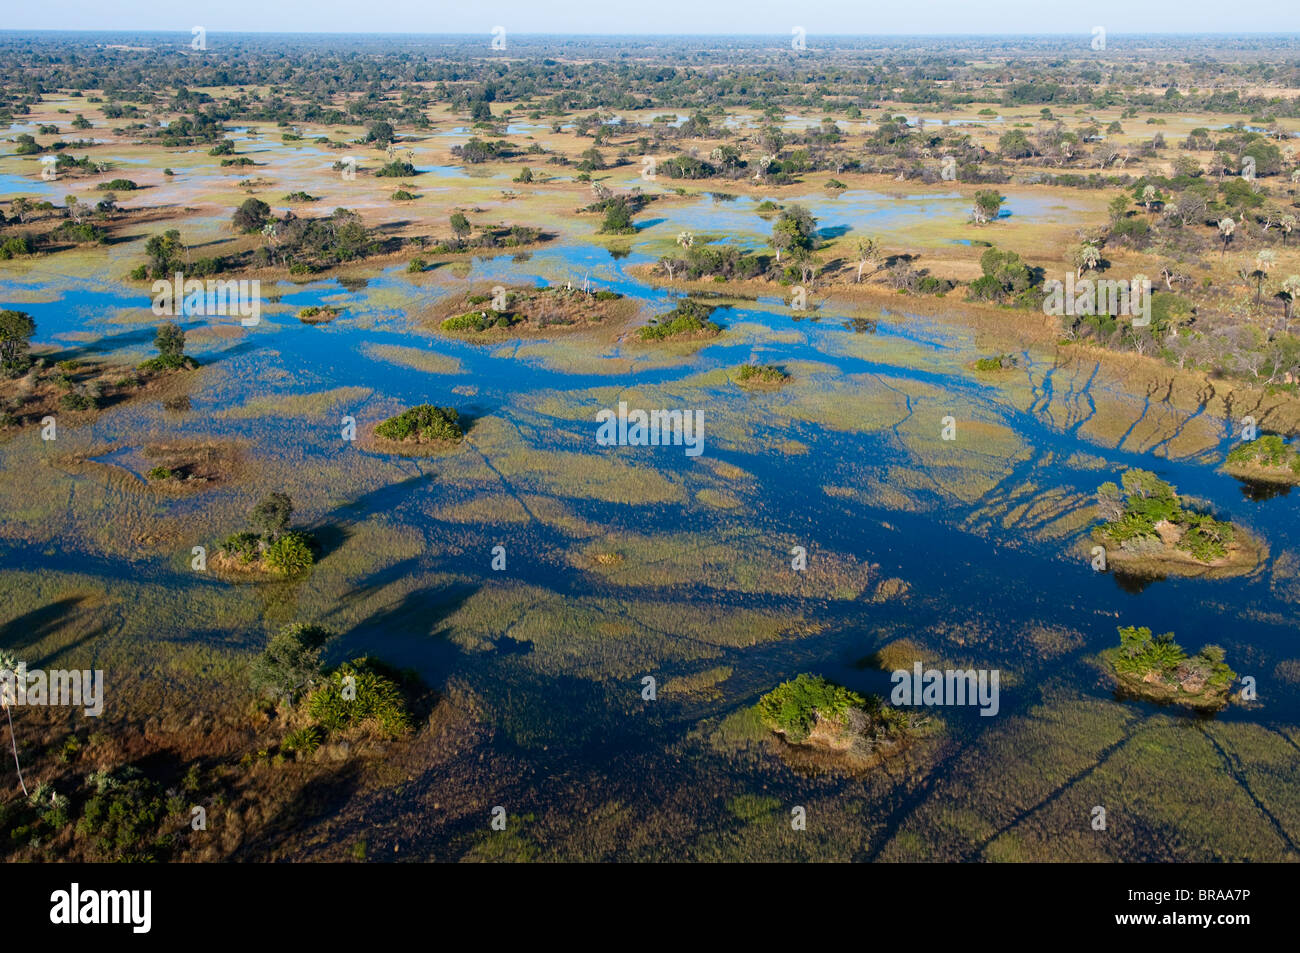 Vue aérienne de Delta de l'Okavango, Botswana, Africa Banque D'Images